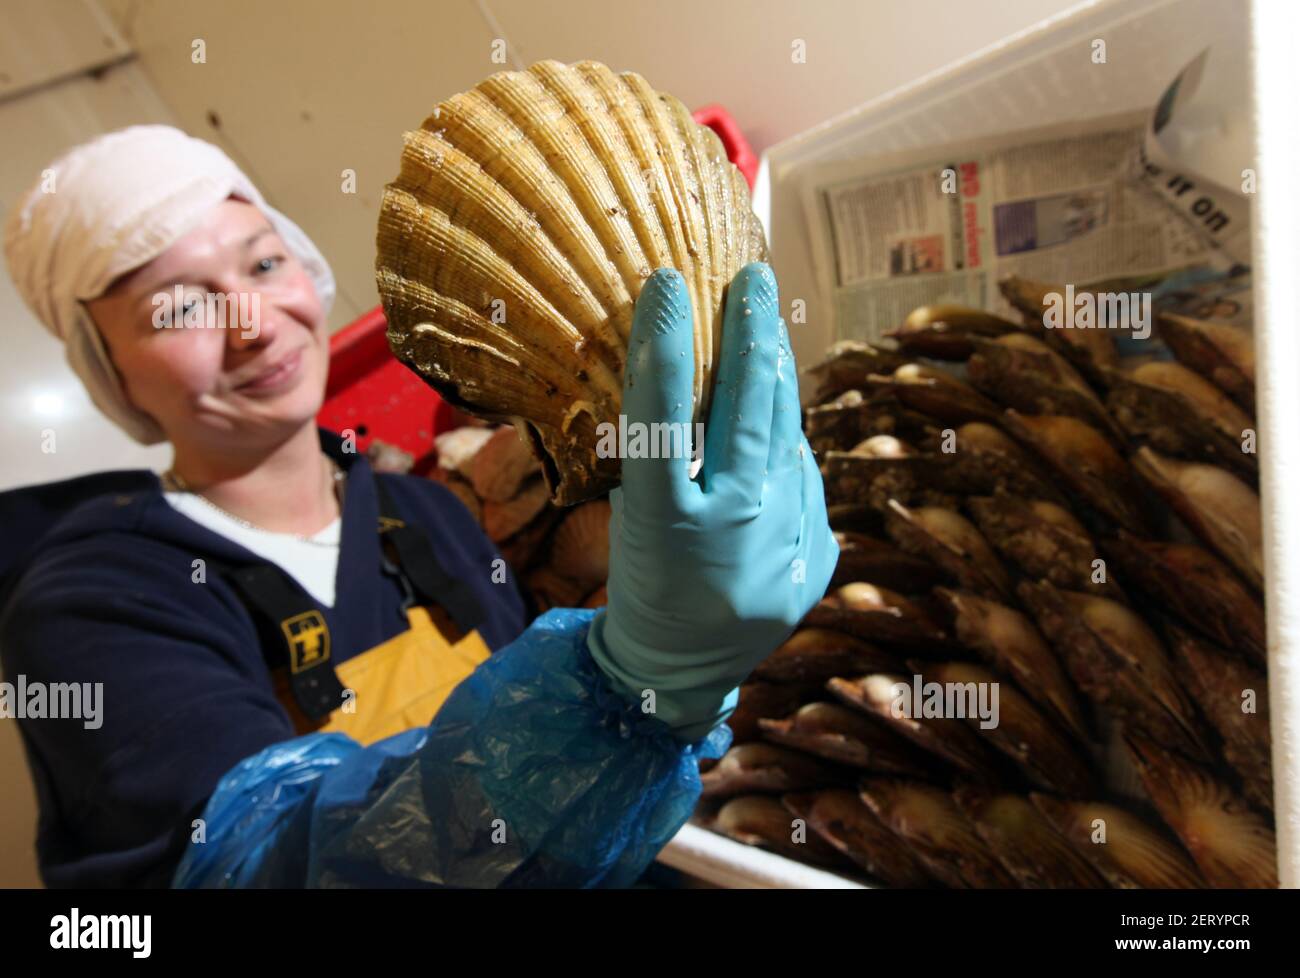 Worker preparing scallops at a processors in Scotland, UK Stock Photo